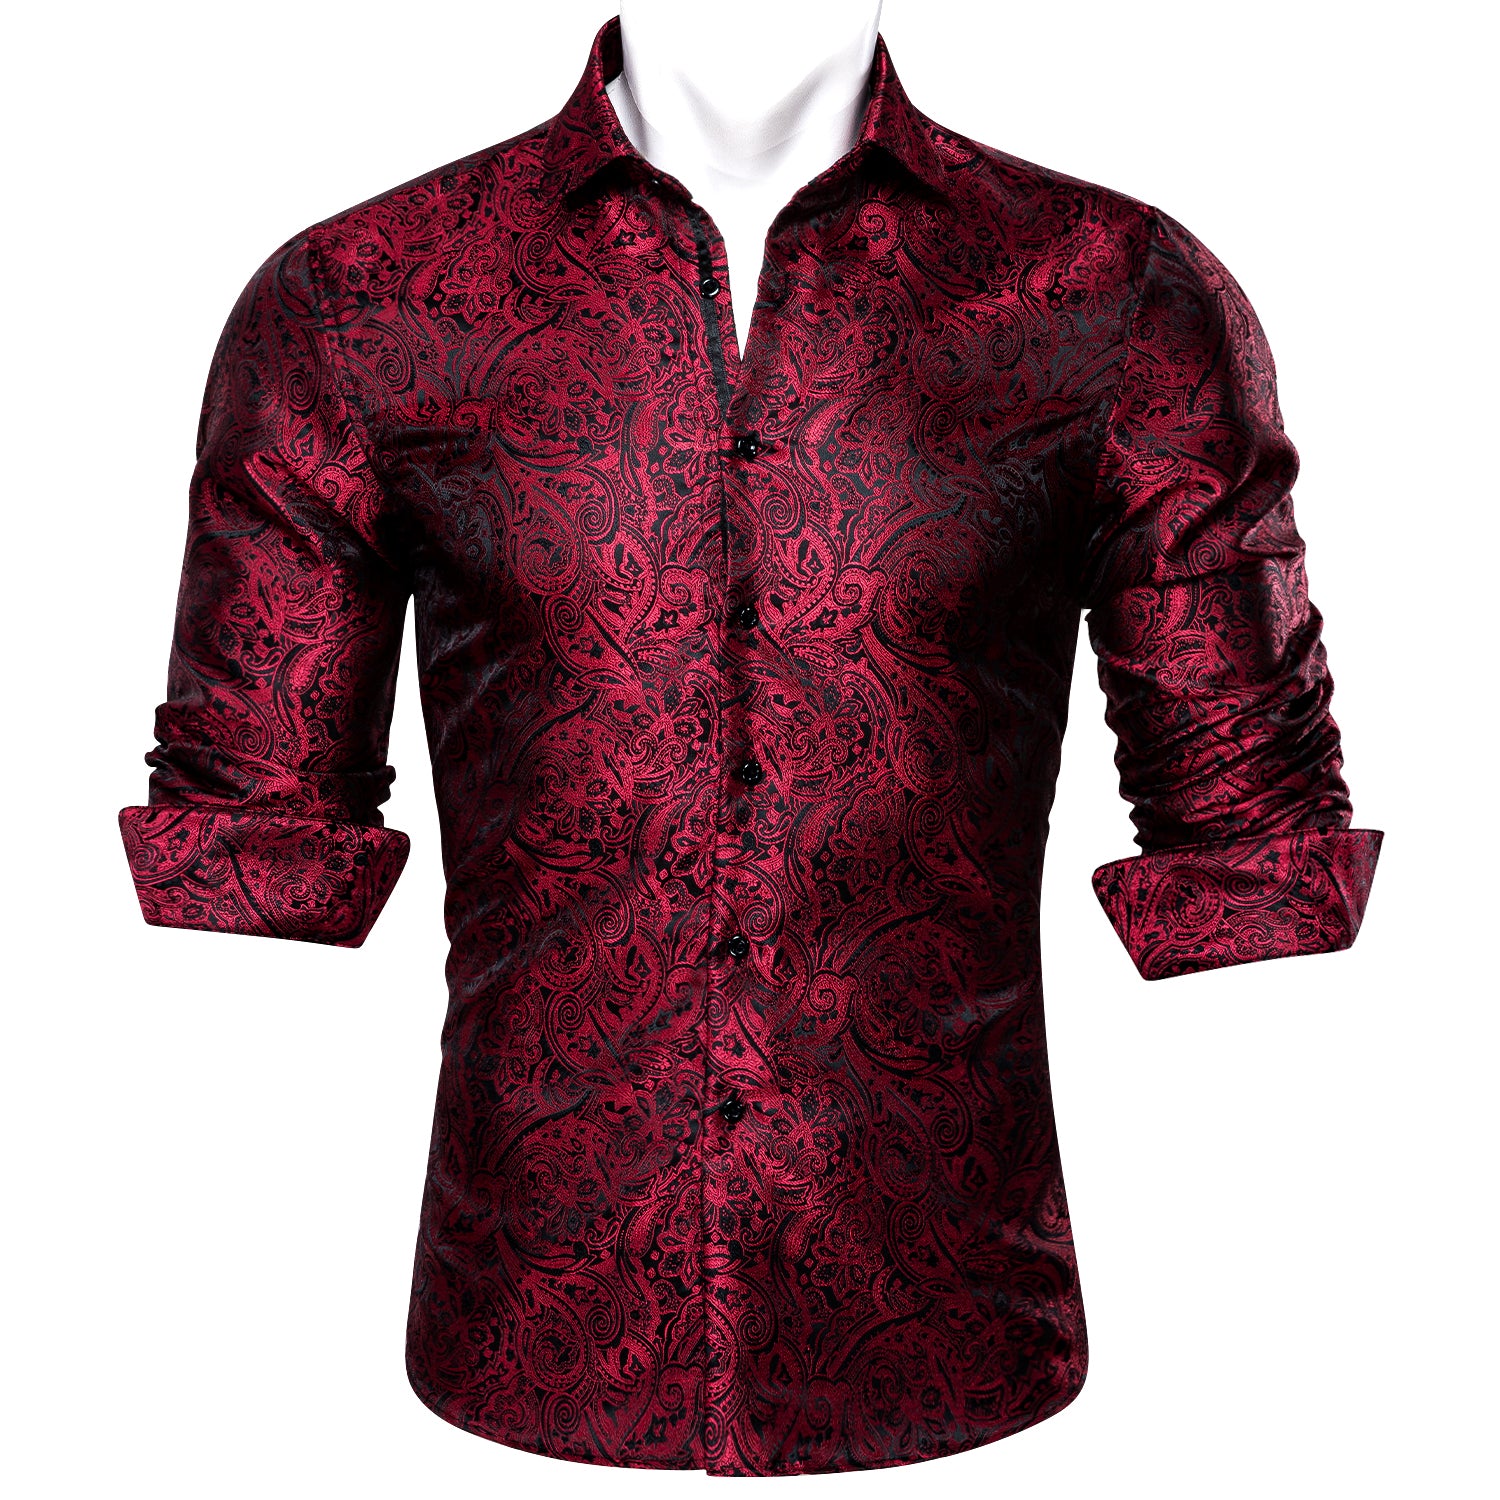 mens' shirts red shirt black jacquard paisley pattern 